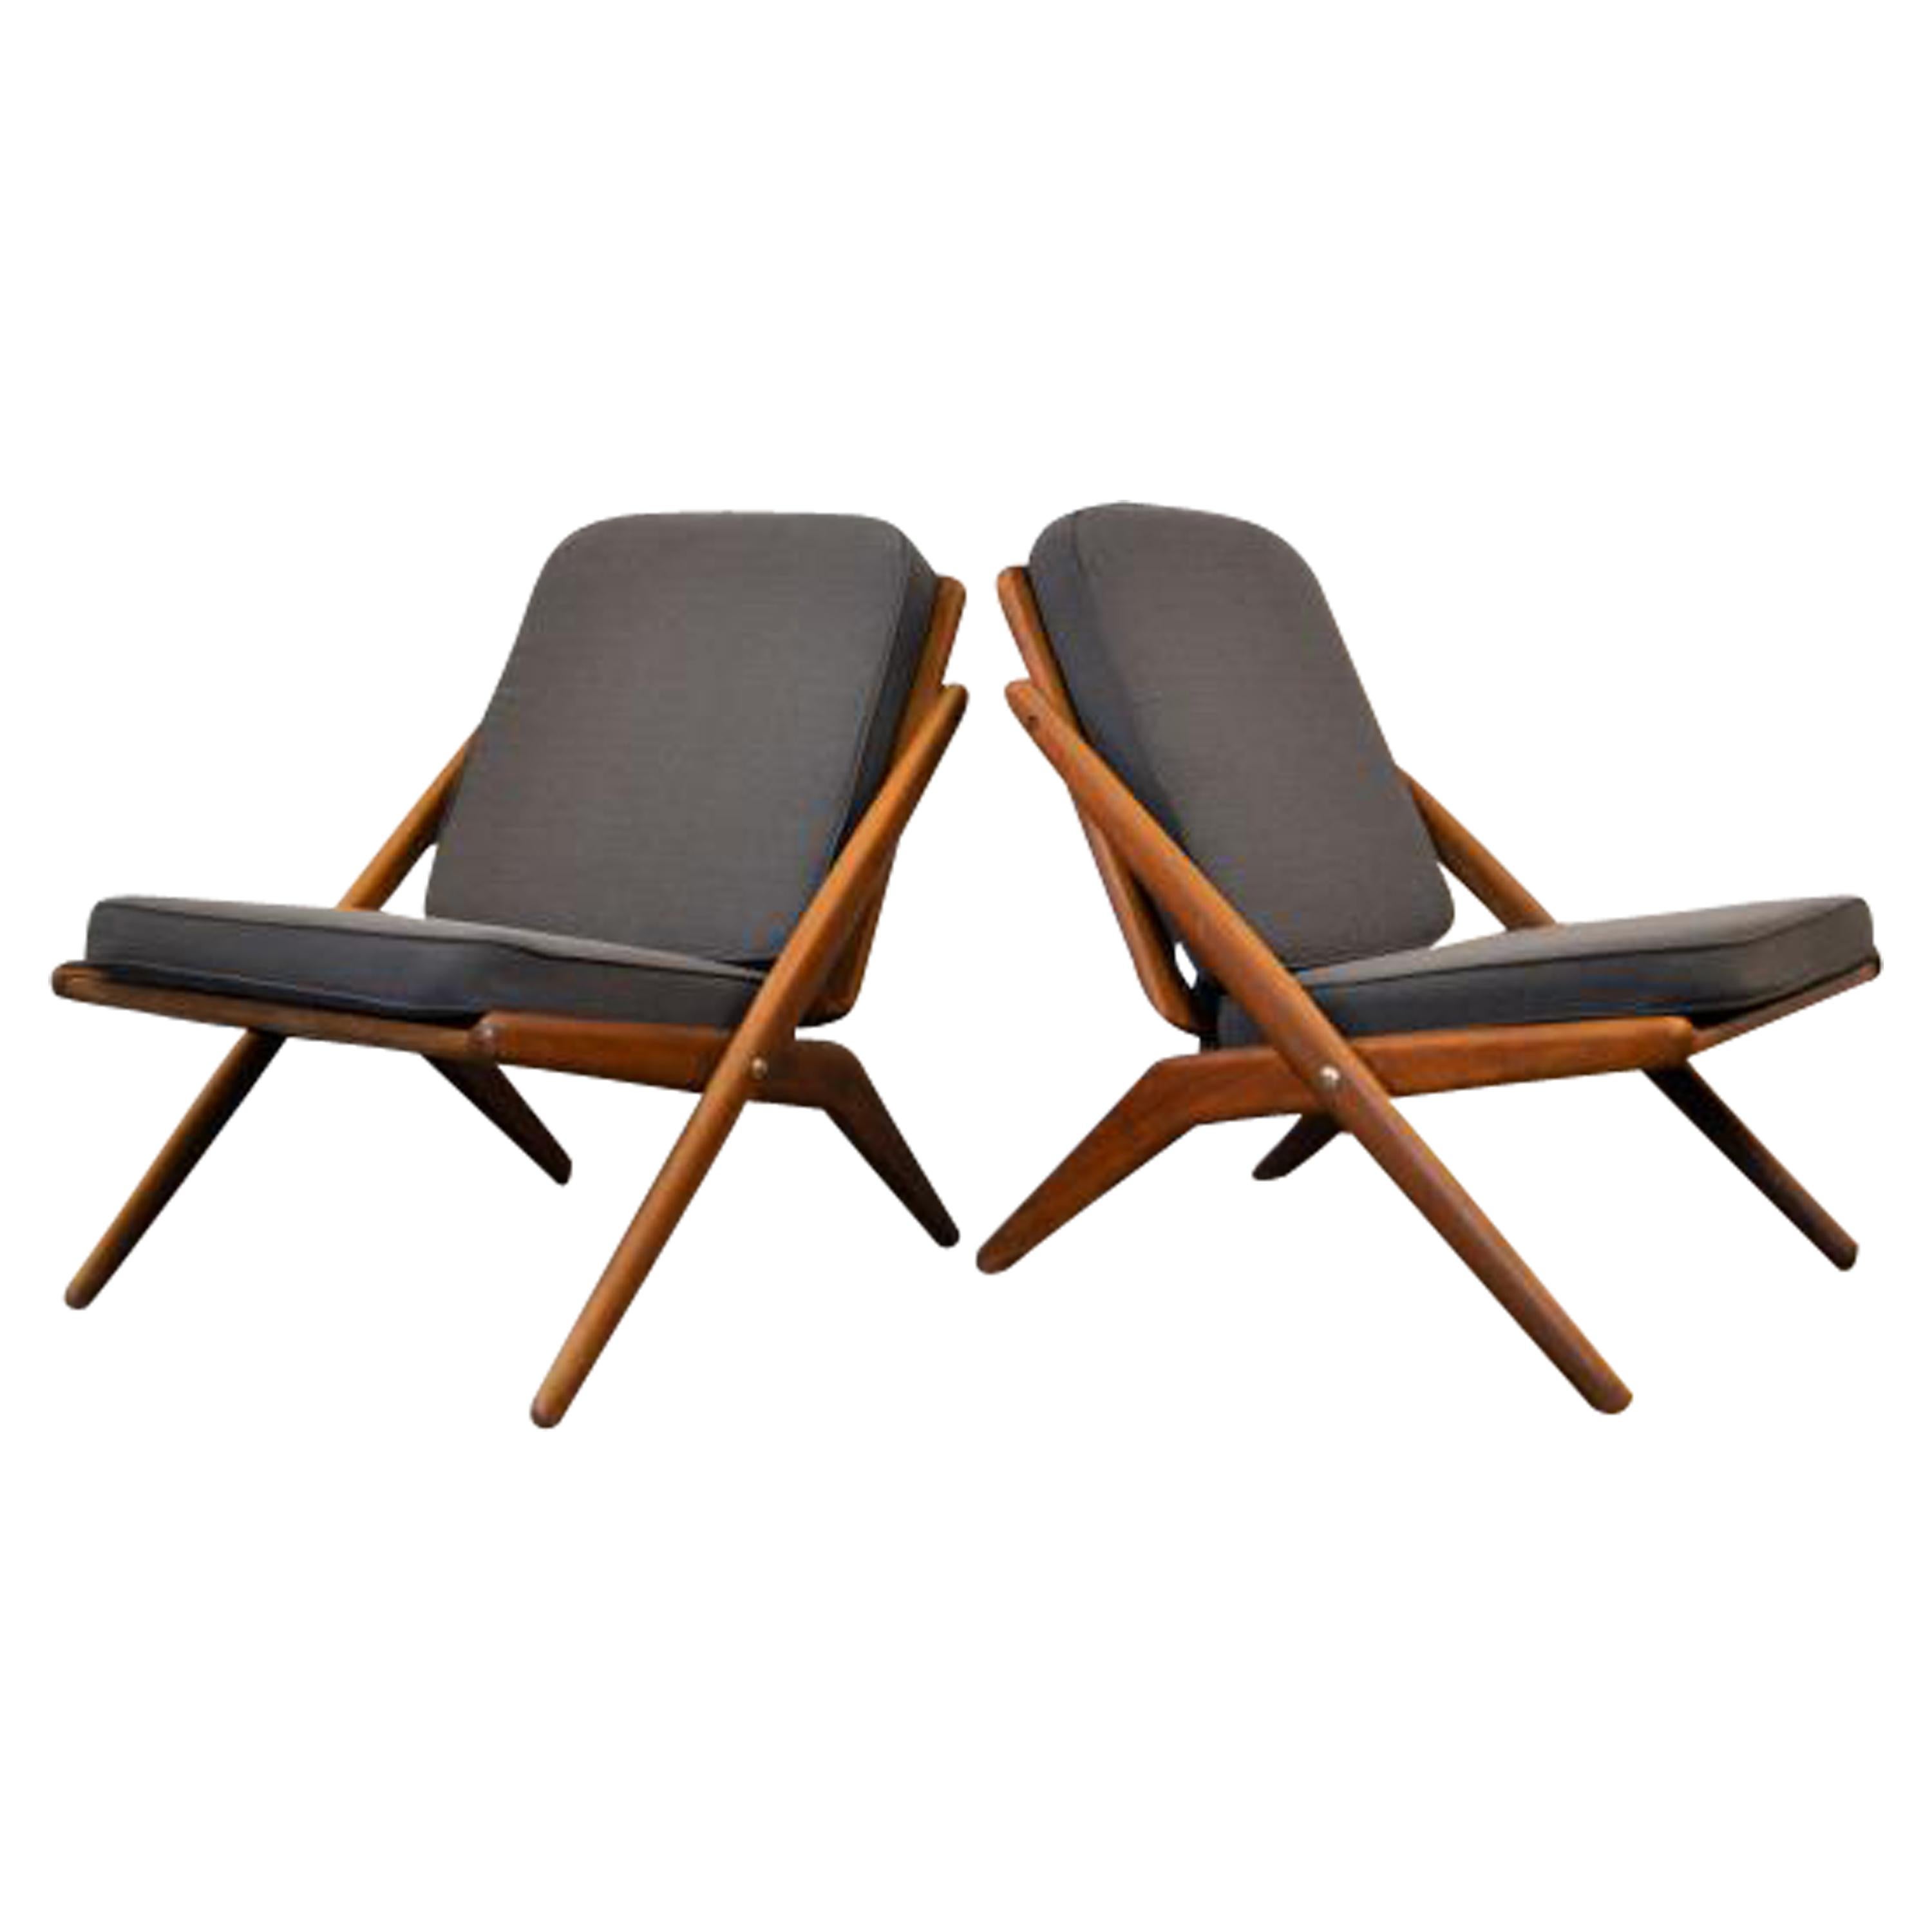 Arne Hovmand Olsen Teak "Siccors" Chairs, Set of Two For Sale